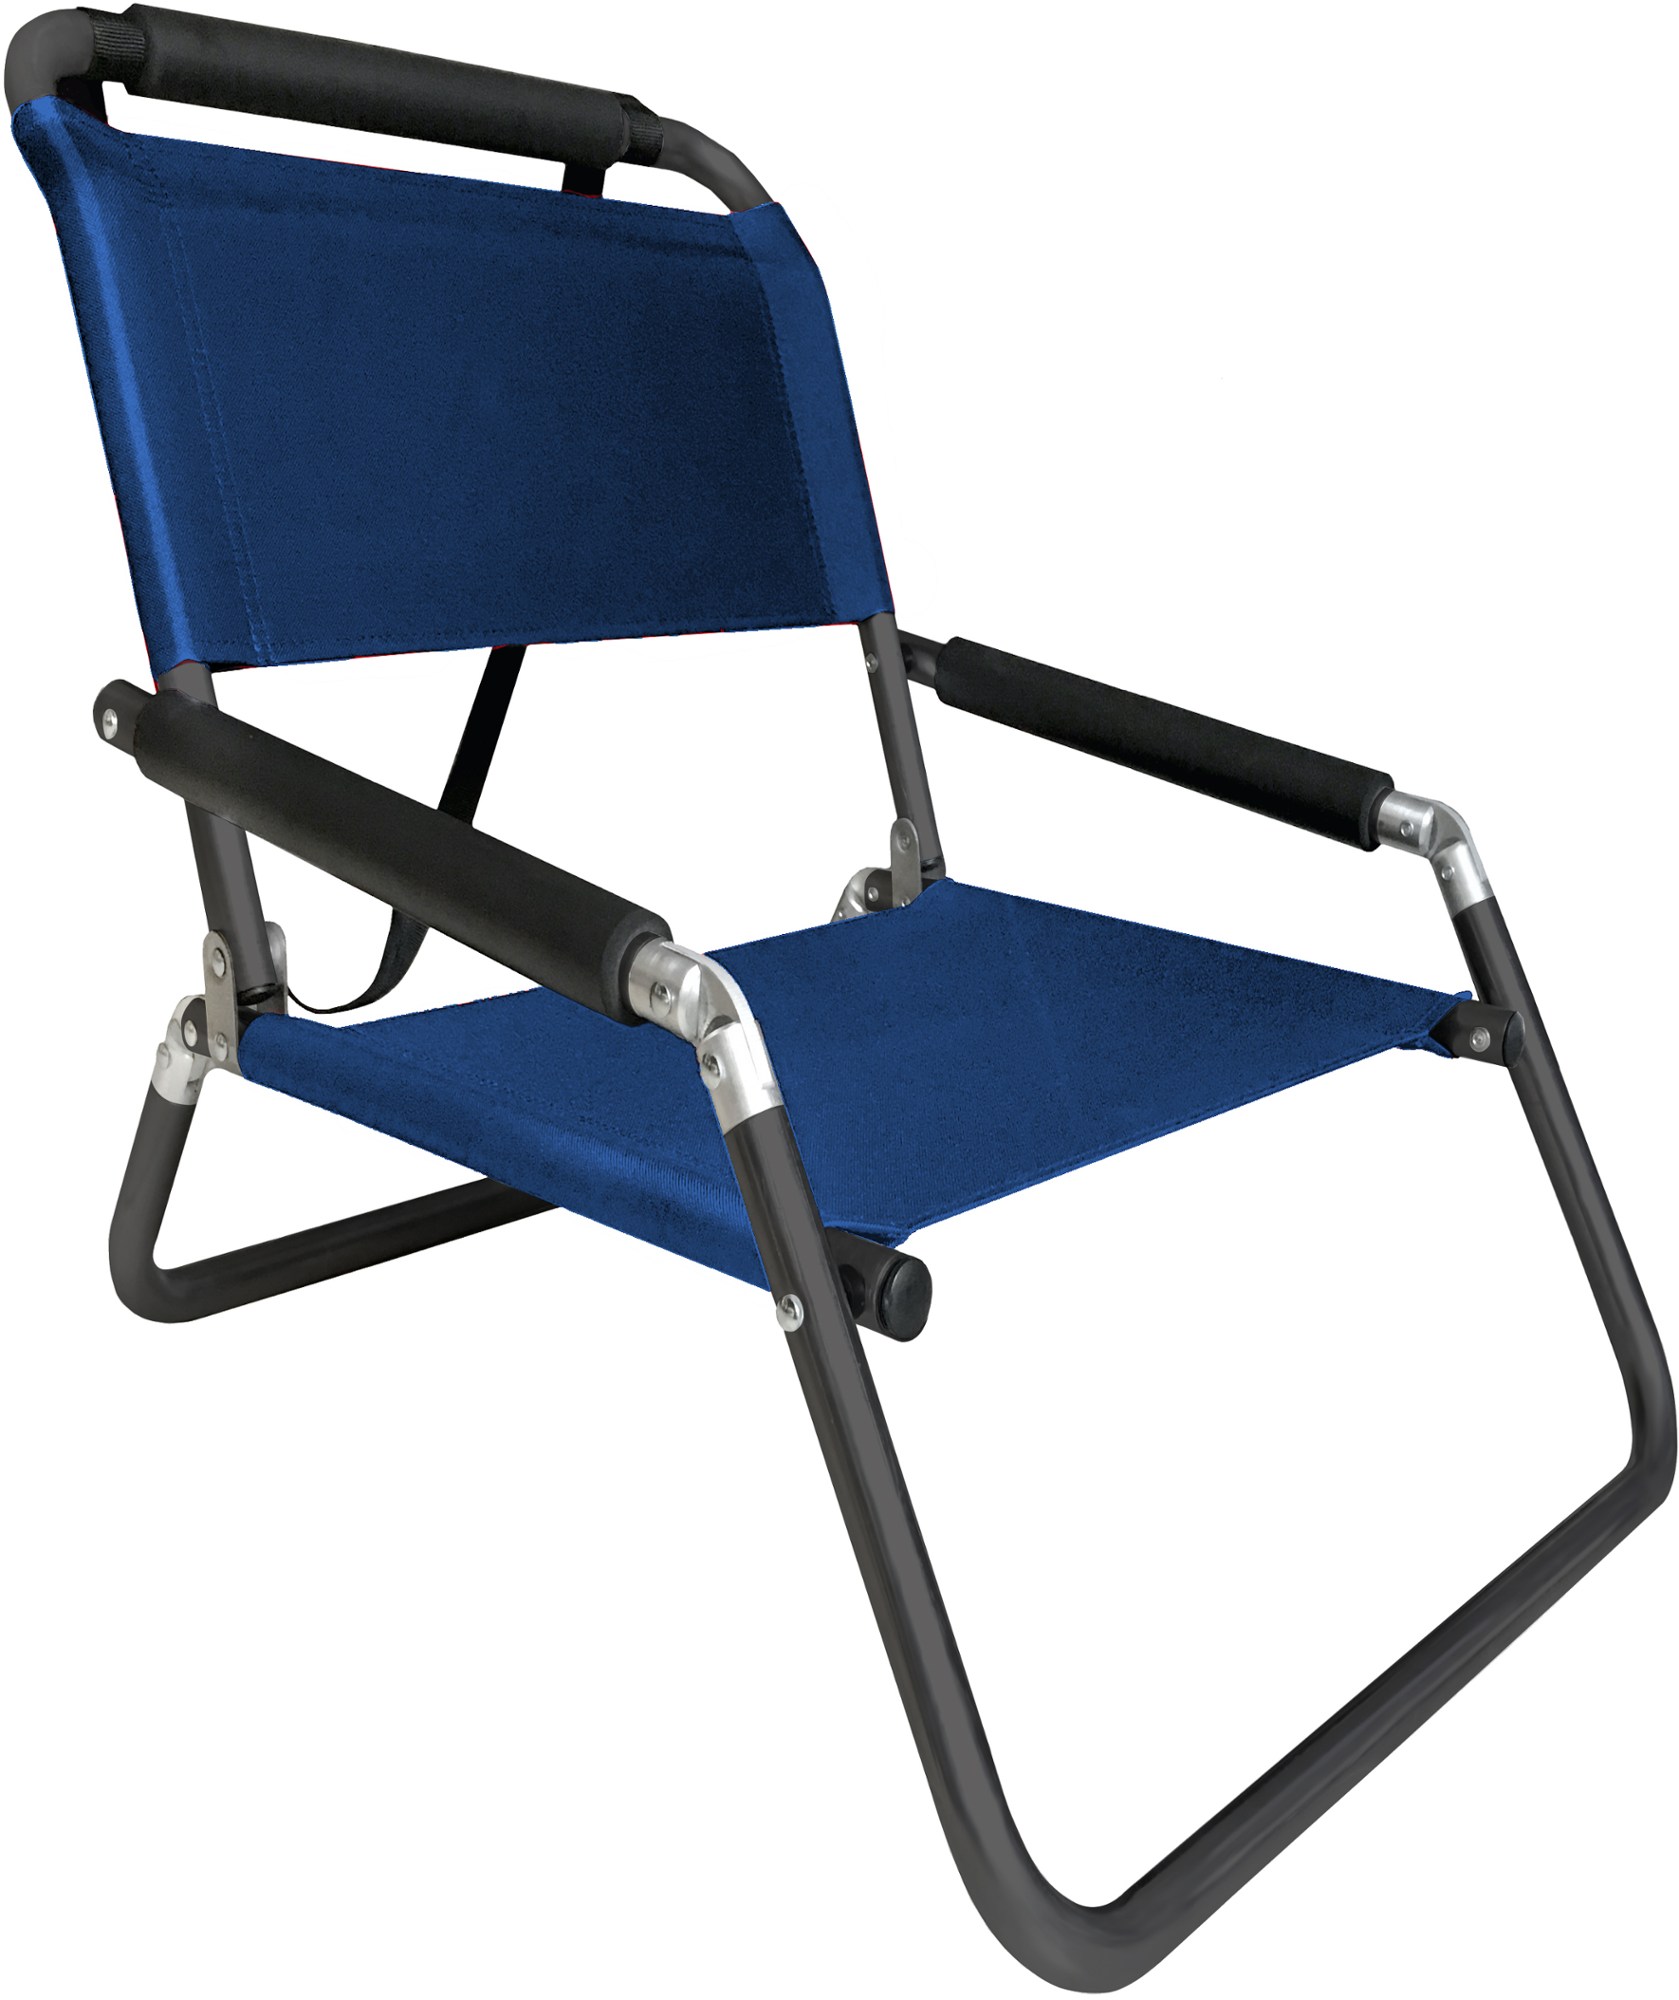 Пляжный стул XL Neso, синий folding reclining chair extendable outdoor beach patio chair adjustable position recliner lounge chair